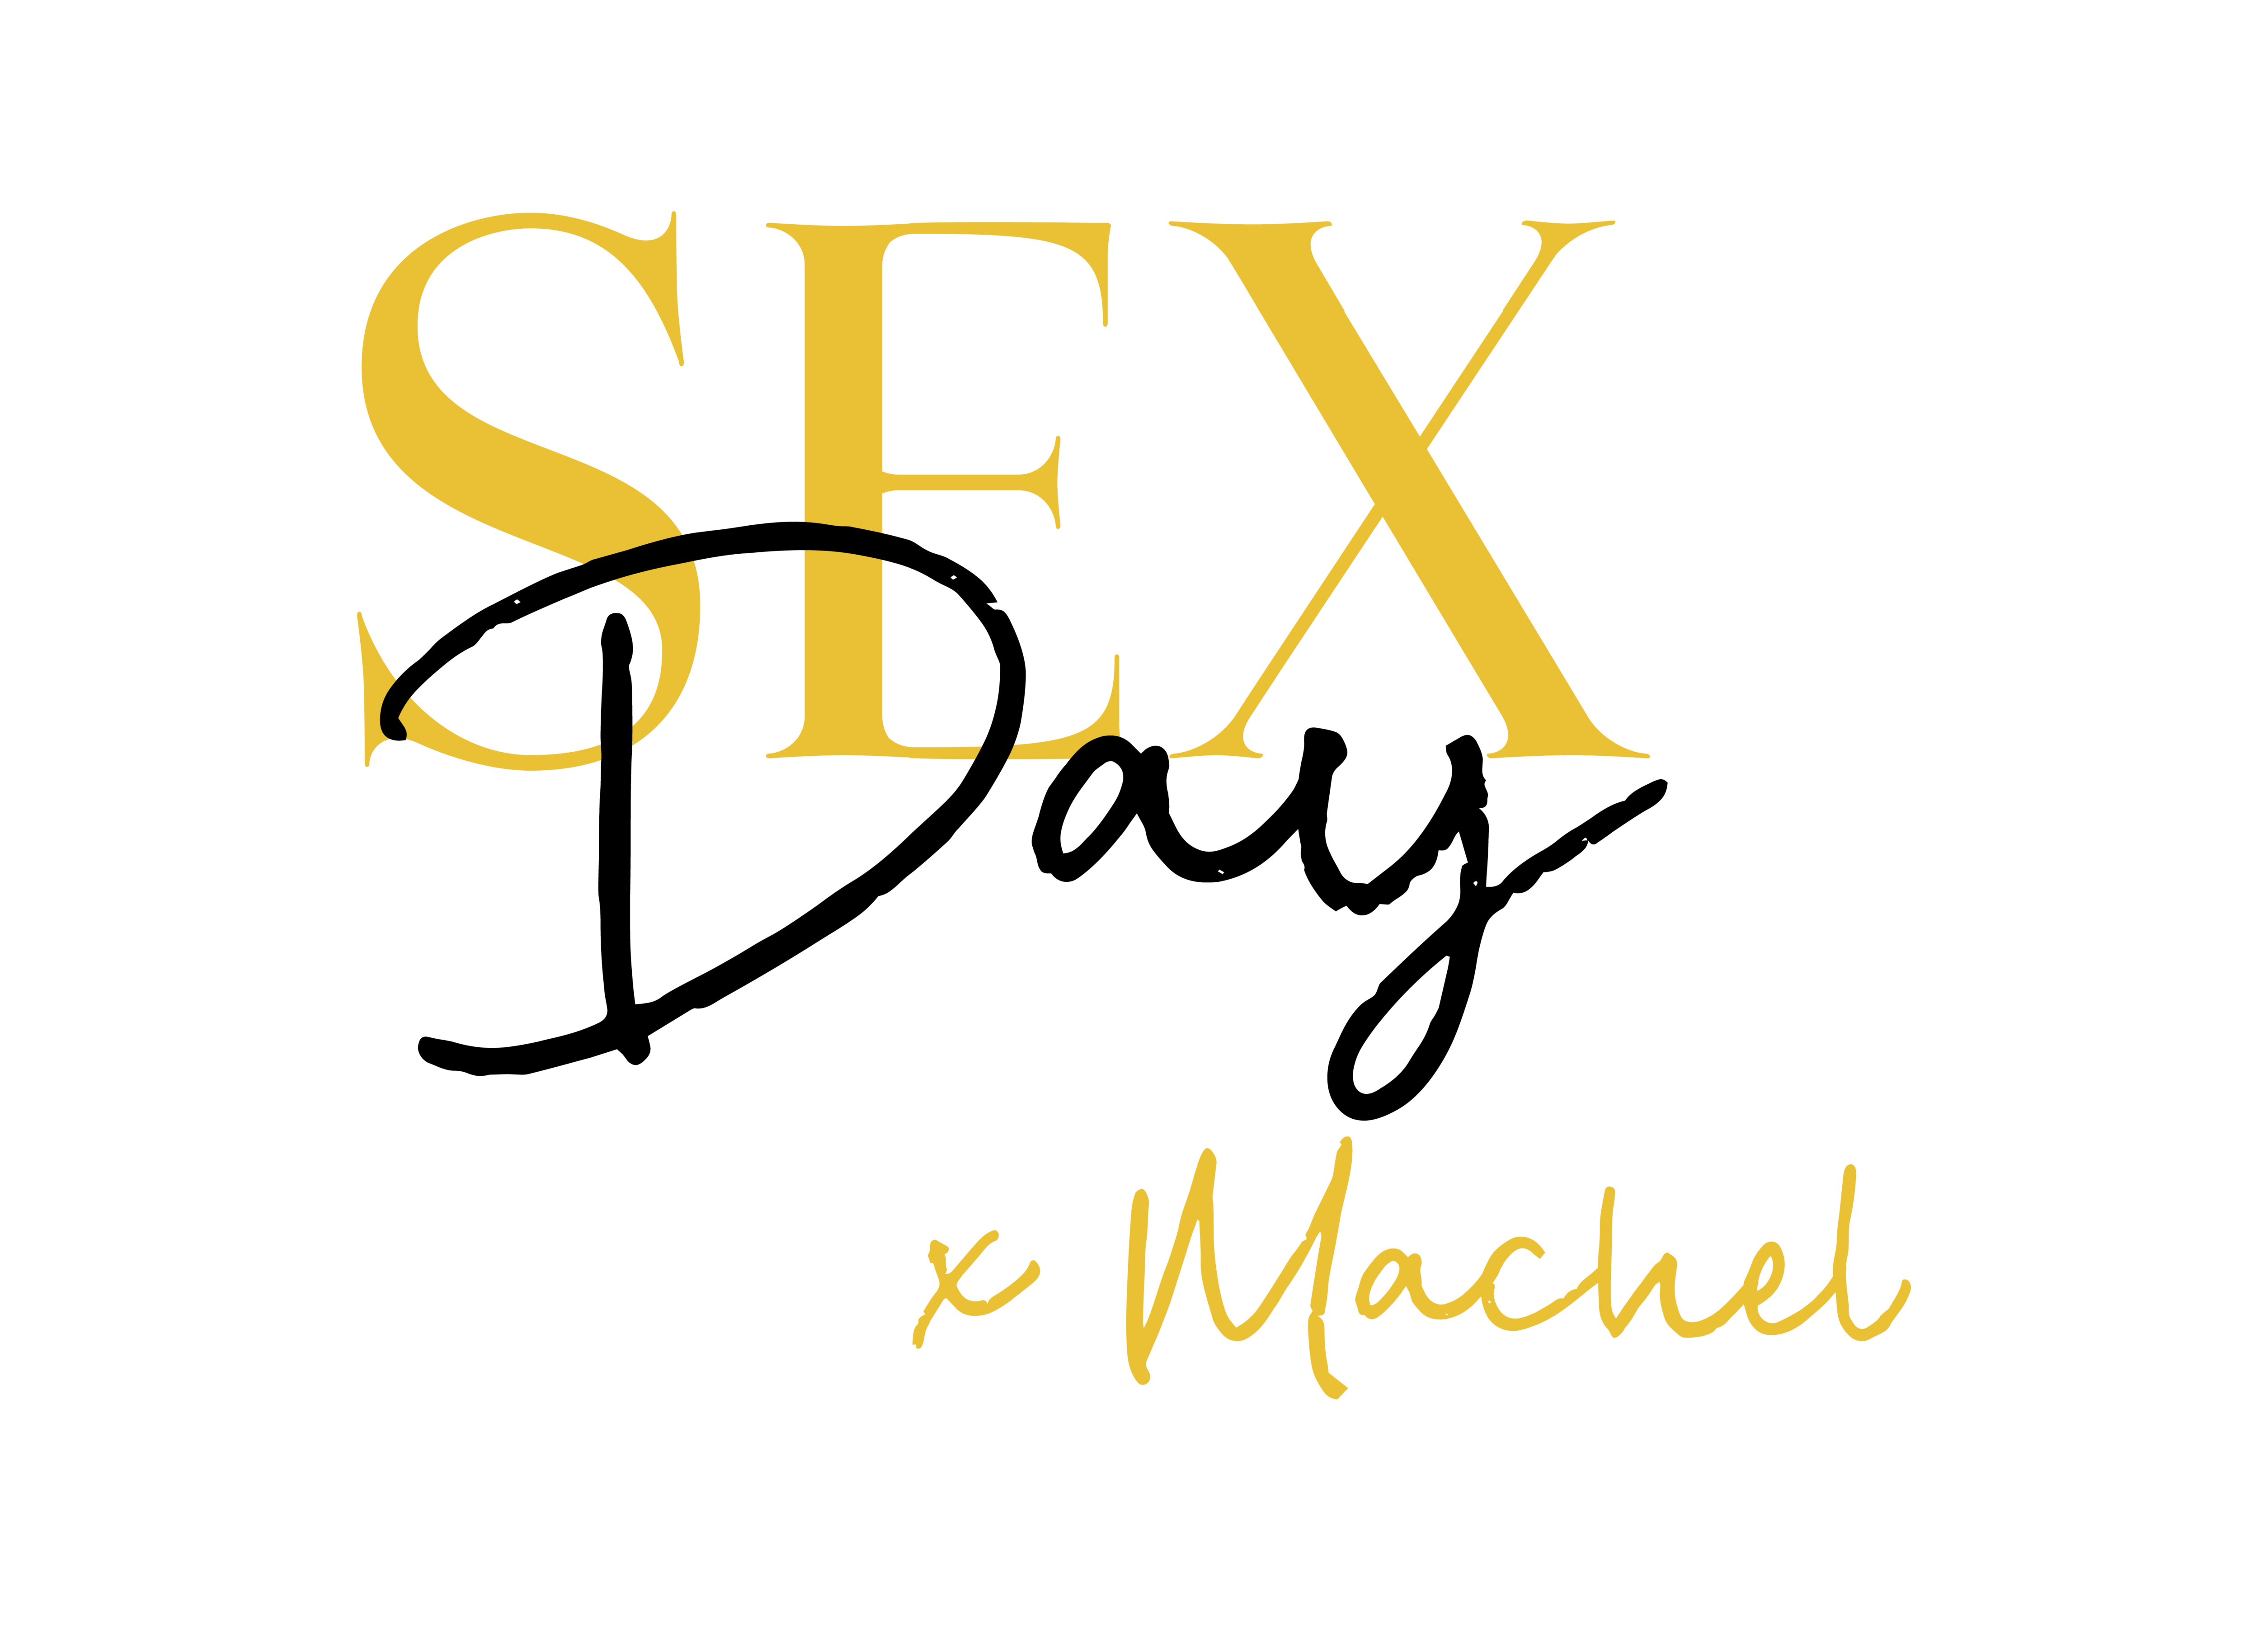 Sex Day by Machel